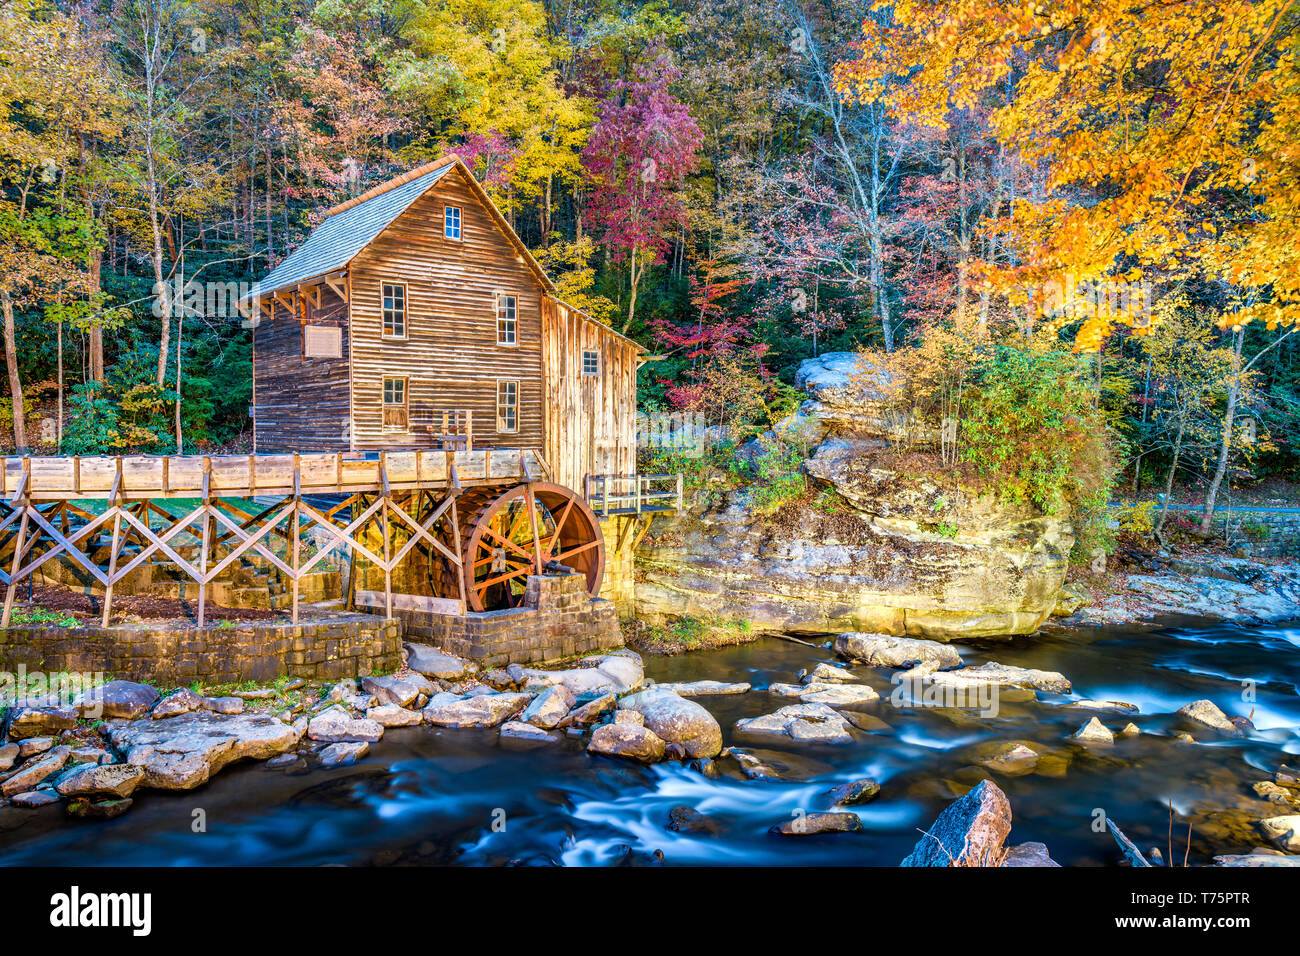 Babcock State Park, West Virginia, USA bei Glade Creek Grist Mill im Herbst Saison. Stockfoto